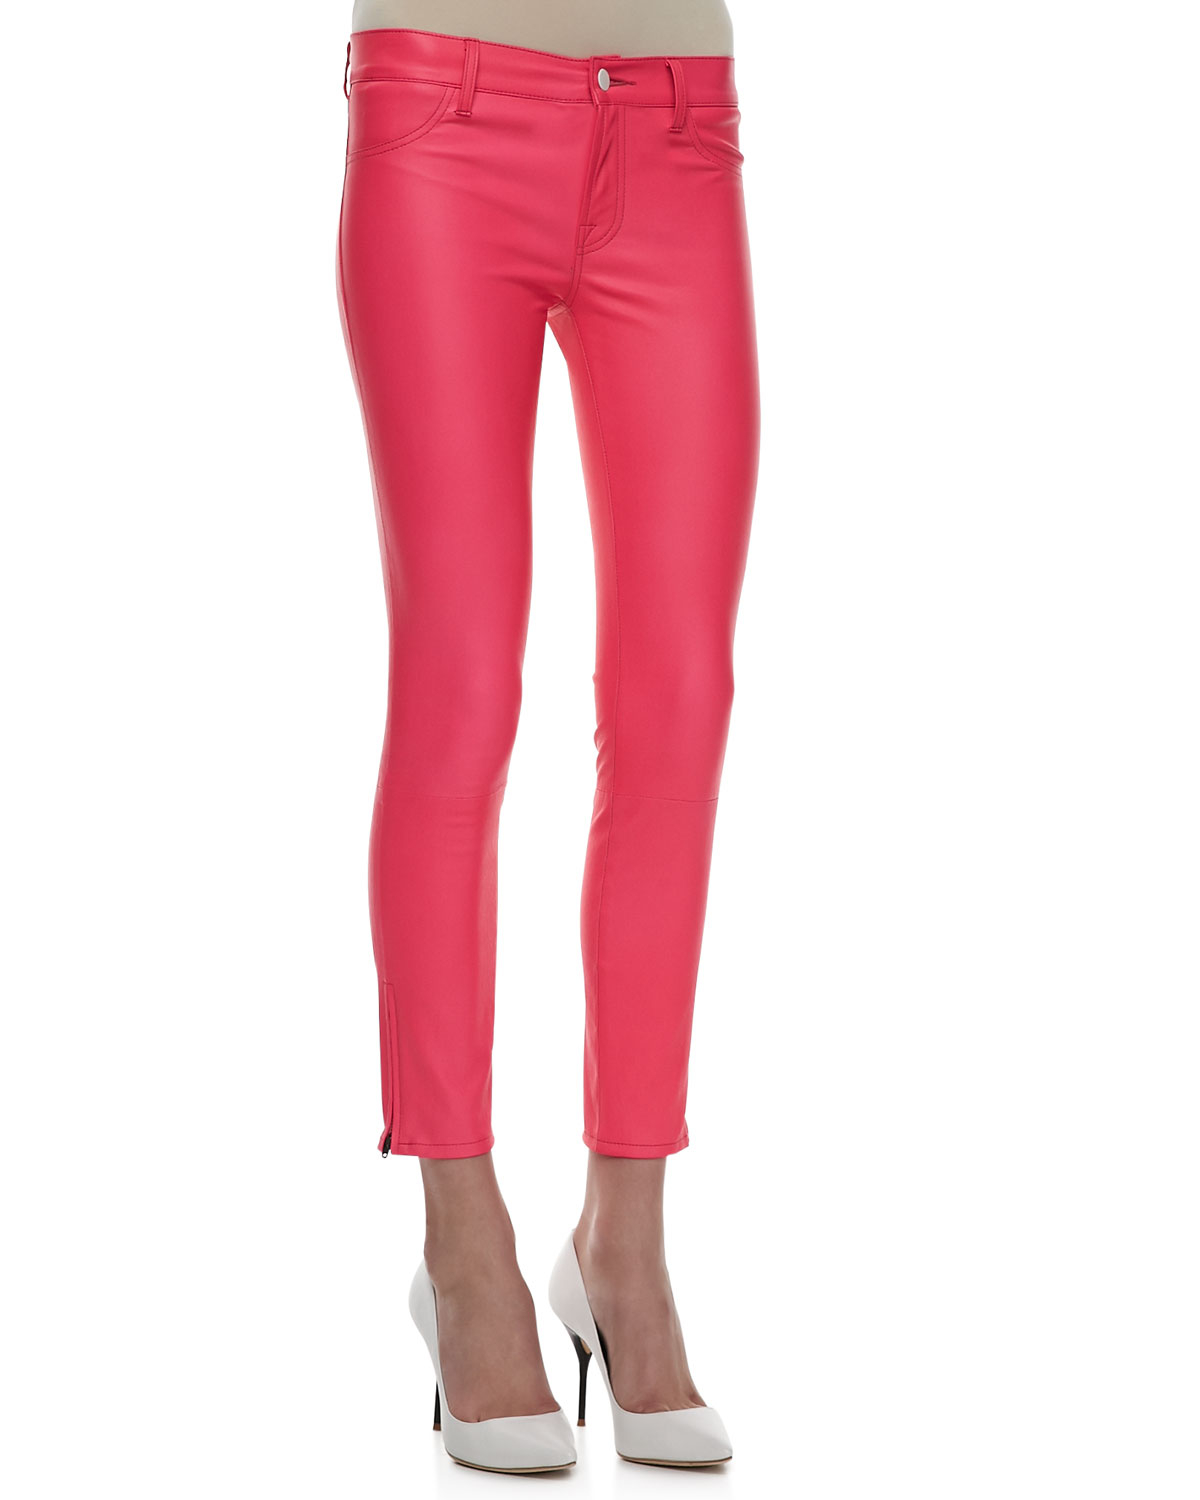 J Brand Midrise Leather Capri Pants in Pink - Lyst